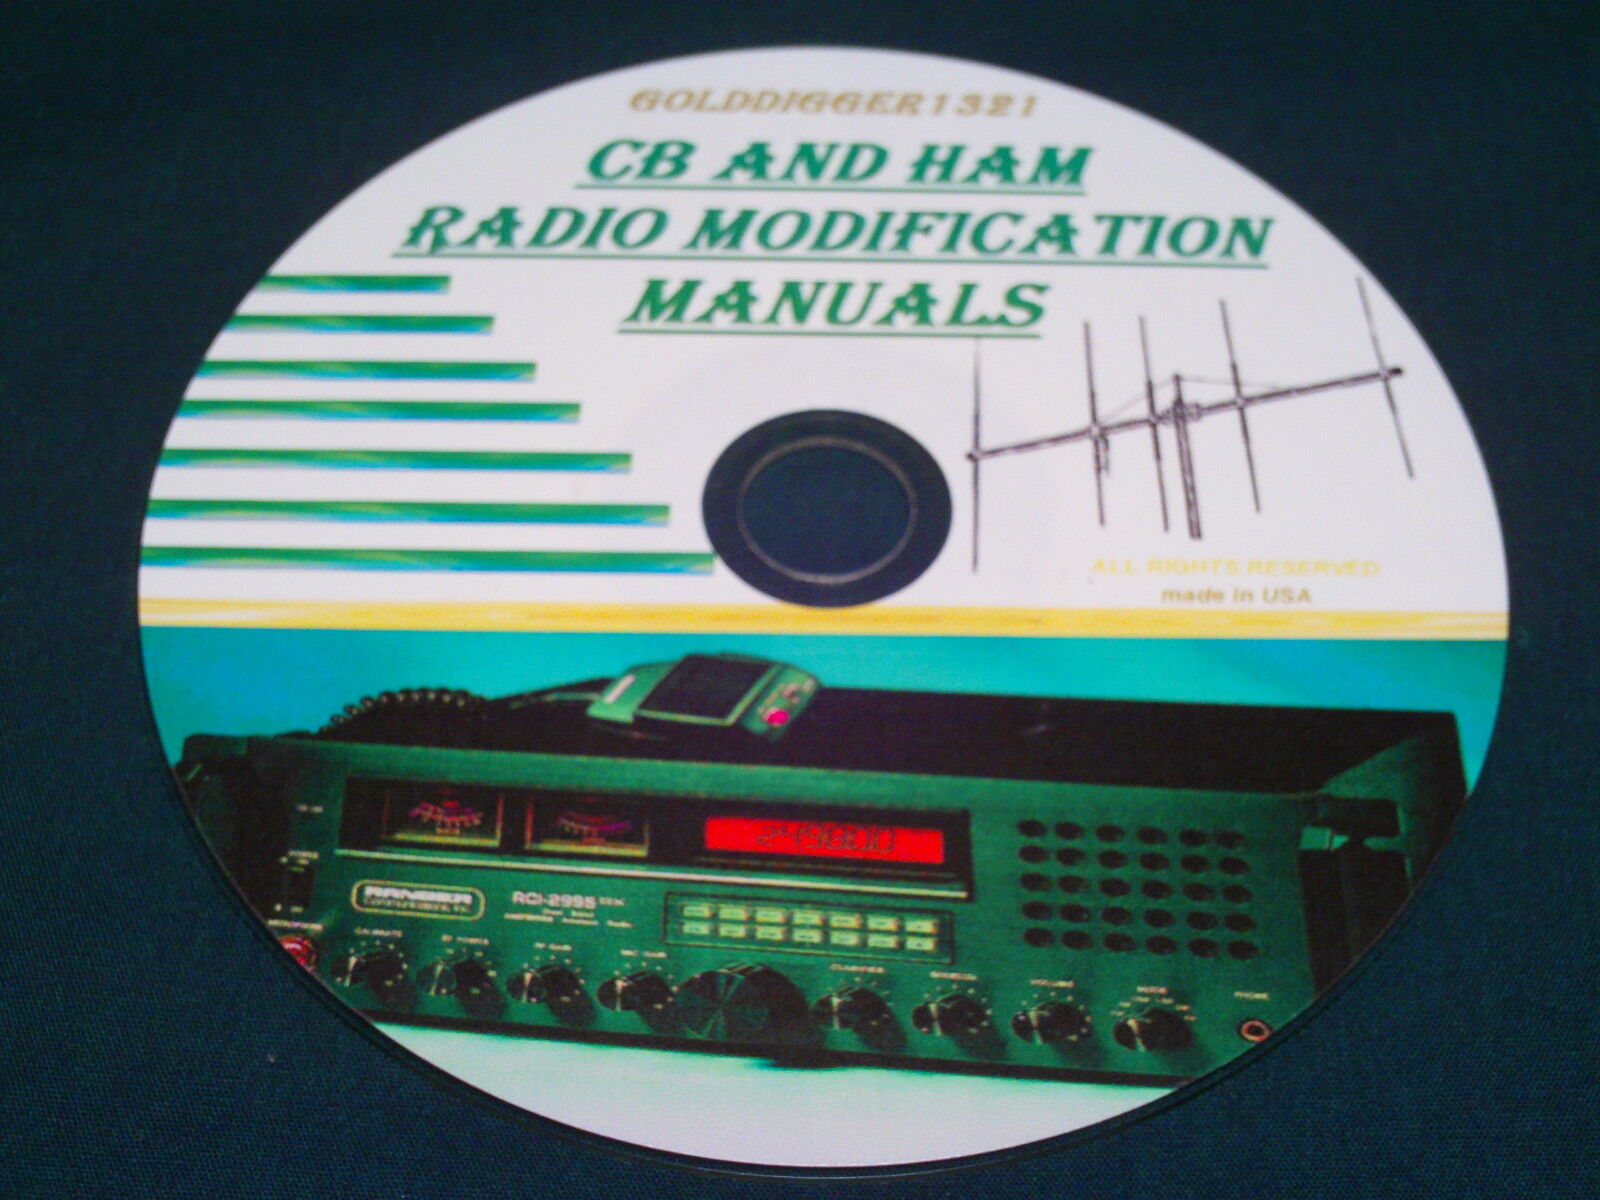 CB AND HAM RADIO MODIFICATION MANUALS ON CD